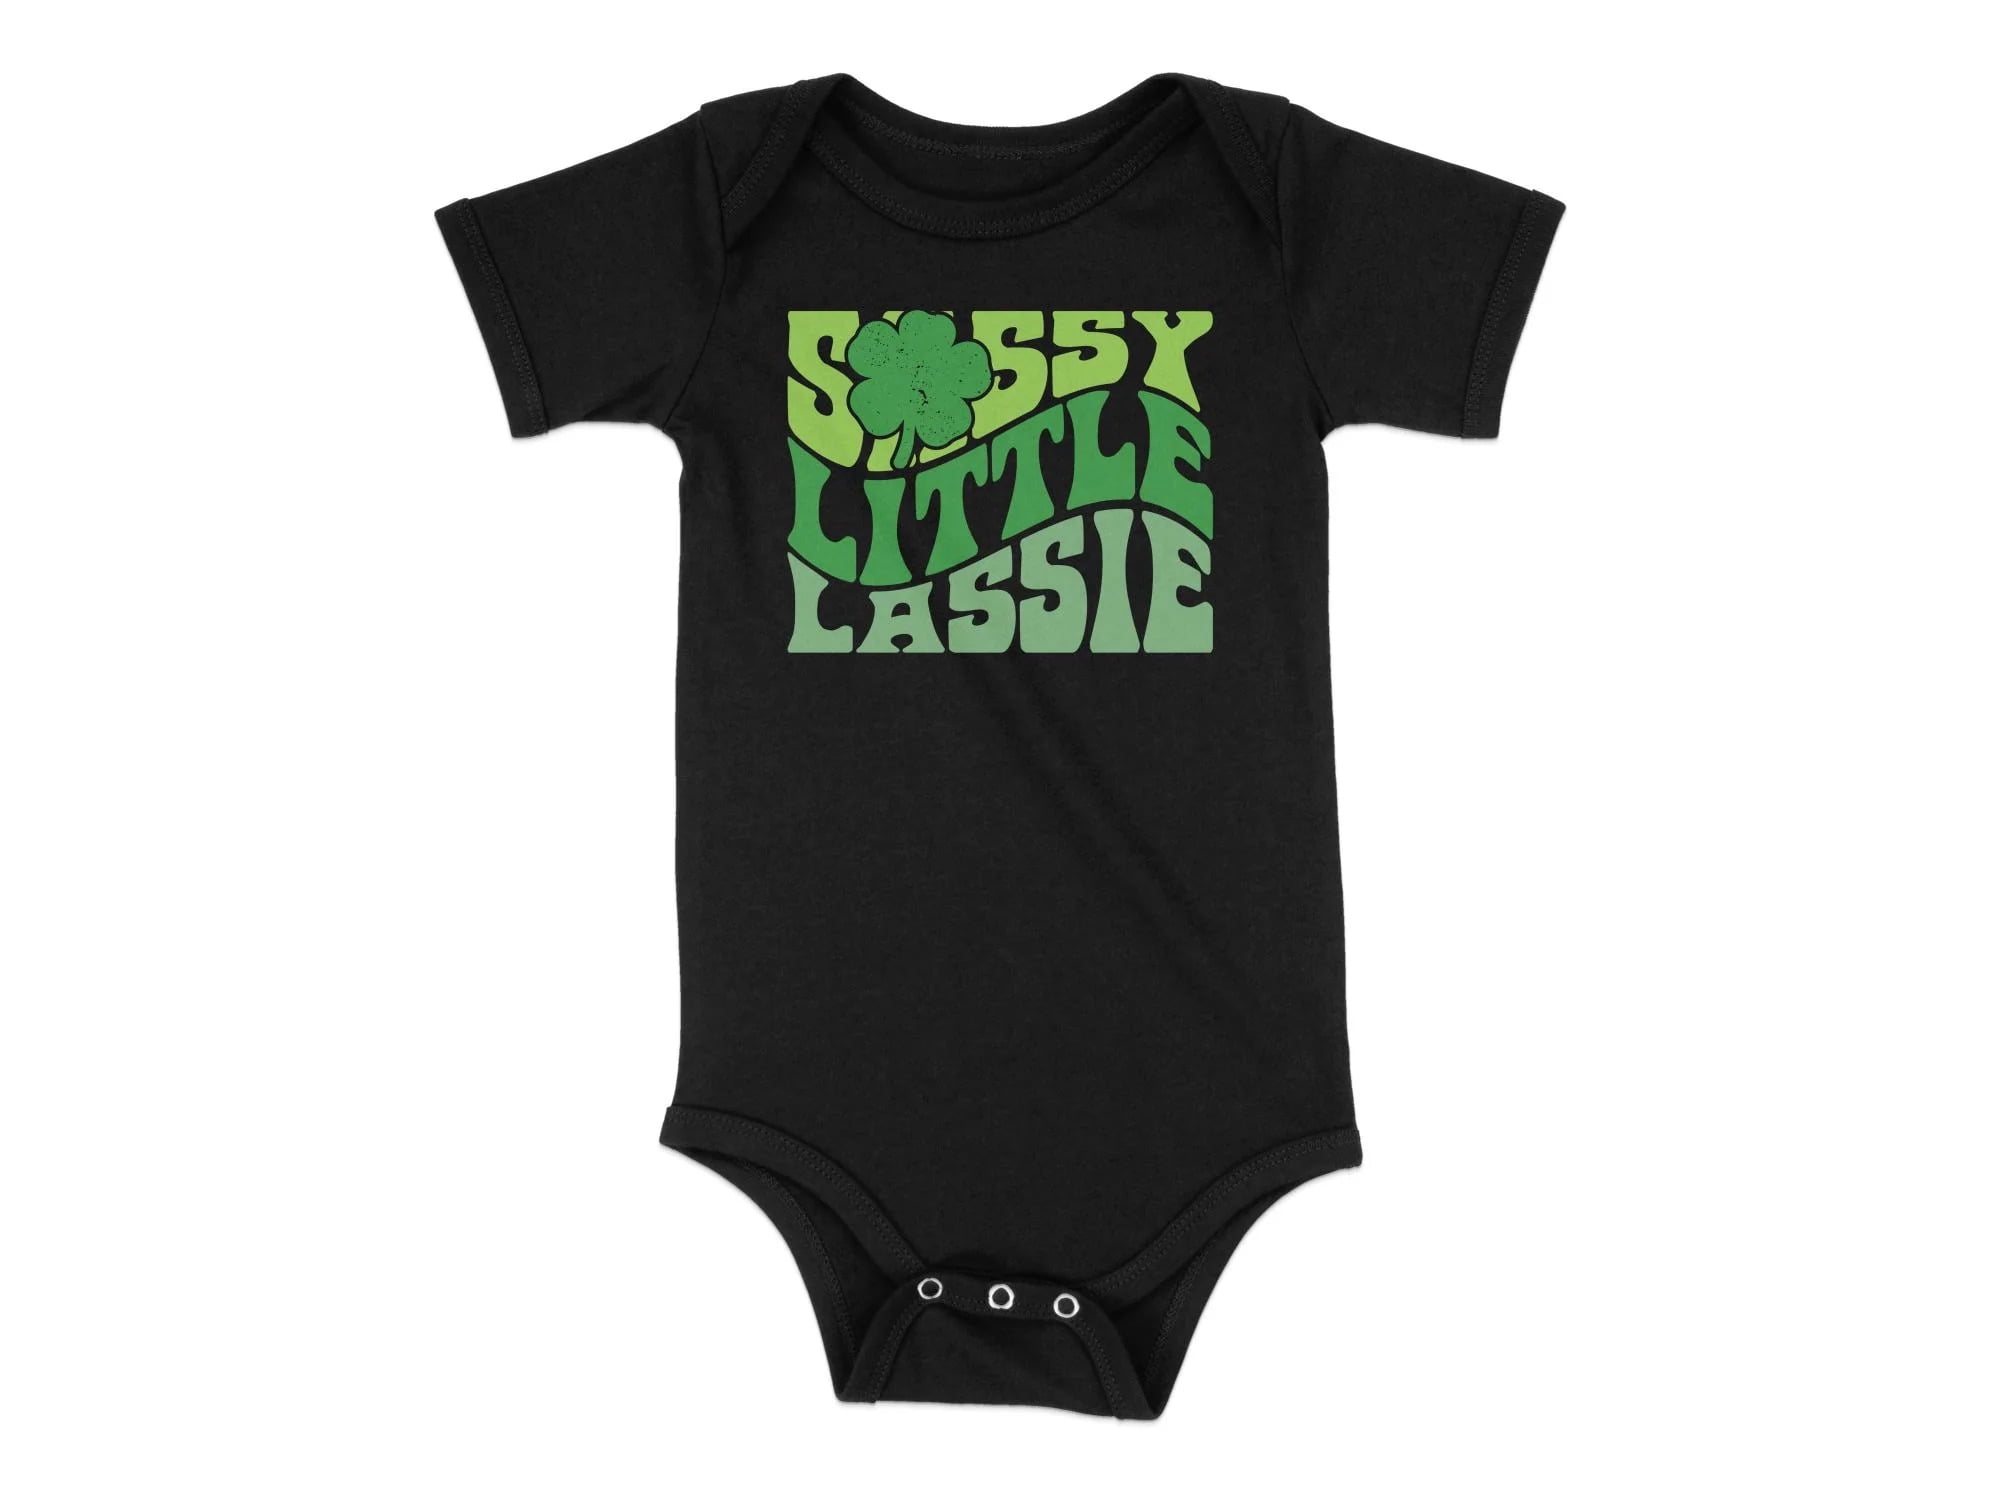 Sassy Little Lassie Onesie, St. Patrick's Day Baby Outfit, Irish Shamrock  Baby Bodysuit, Green Clover Infant Clothing, Newborn Gift